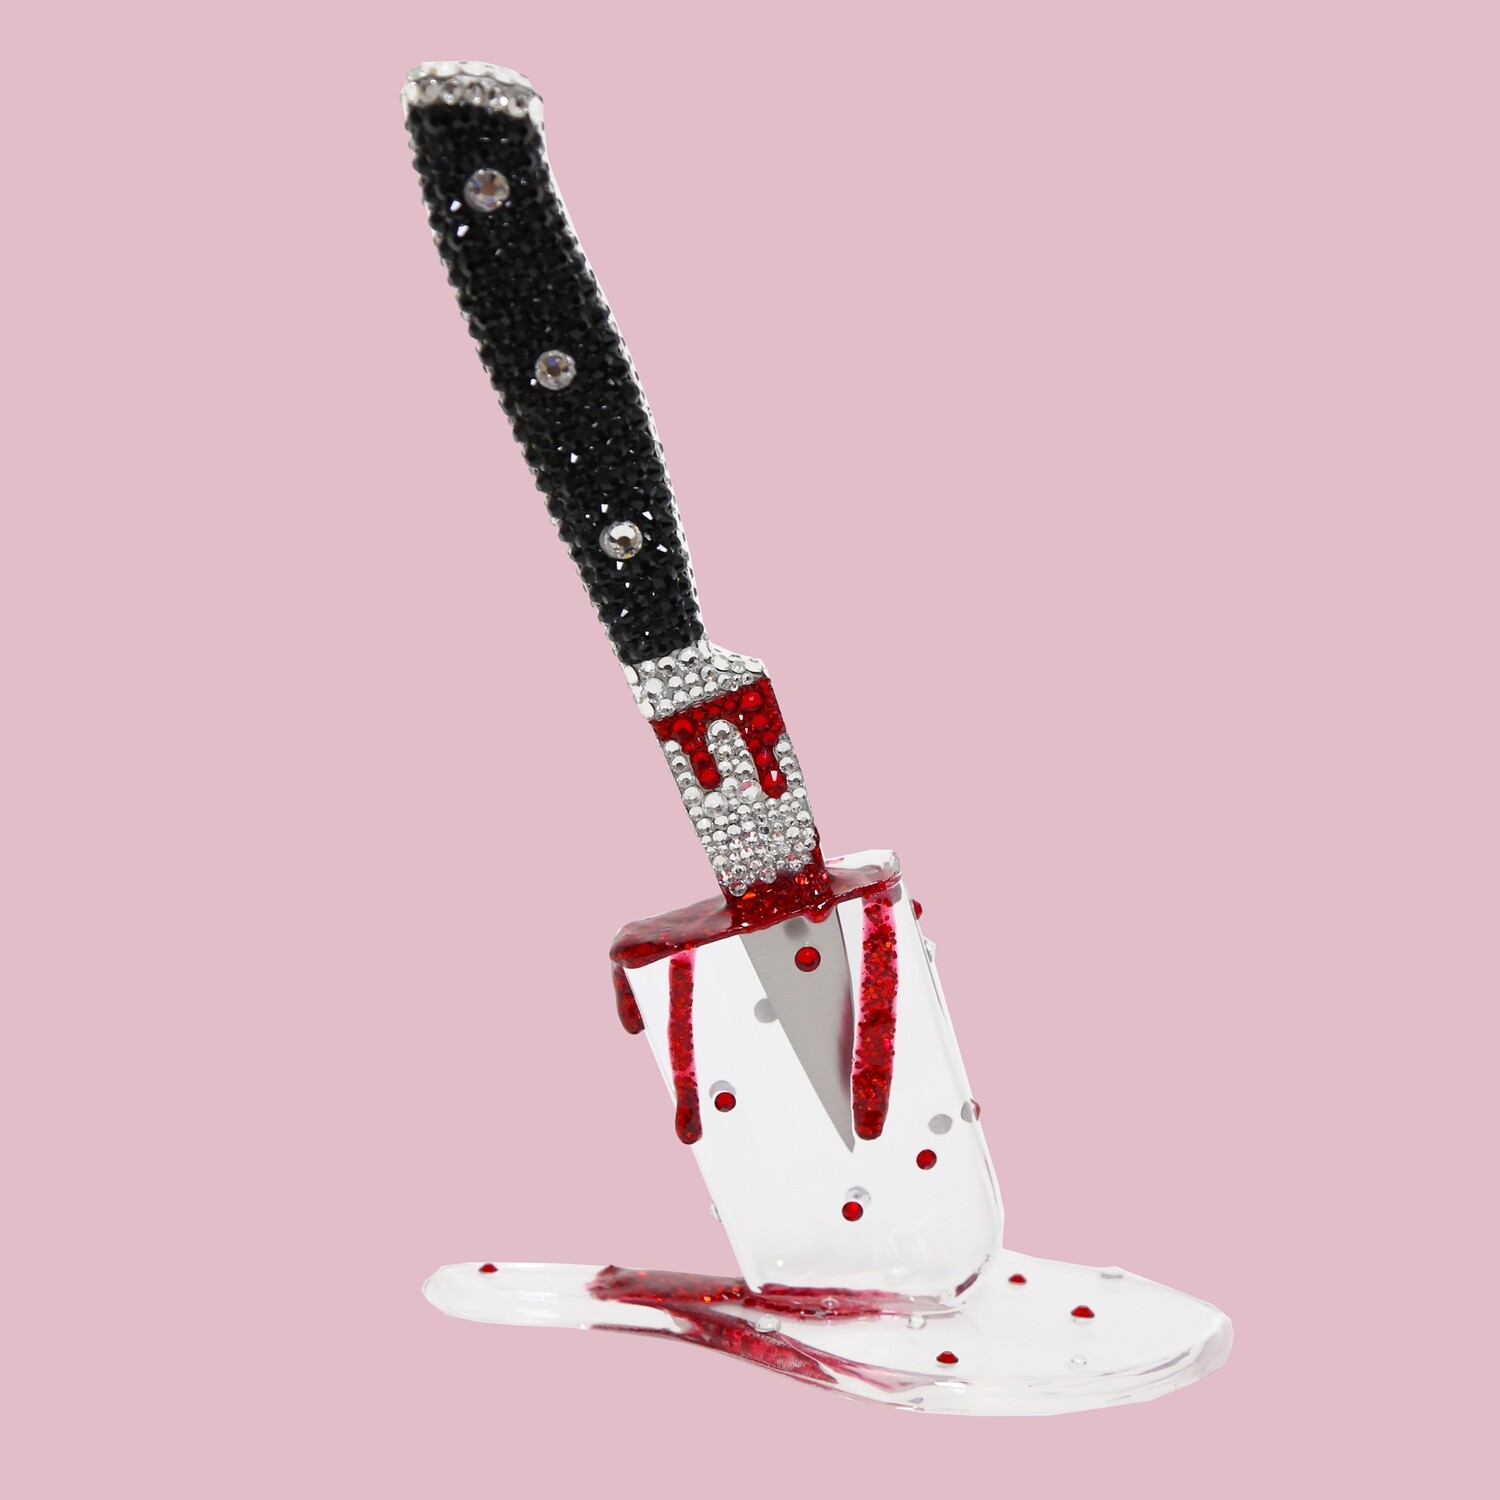 Melting Popsicle Art - Pop Massacre 3 - Original Melting Pops